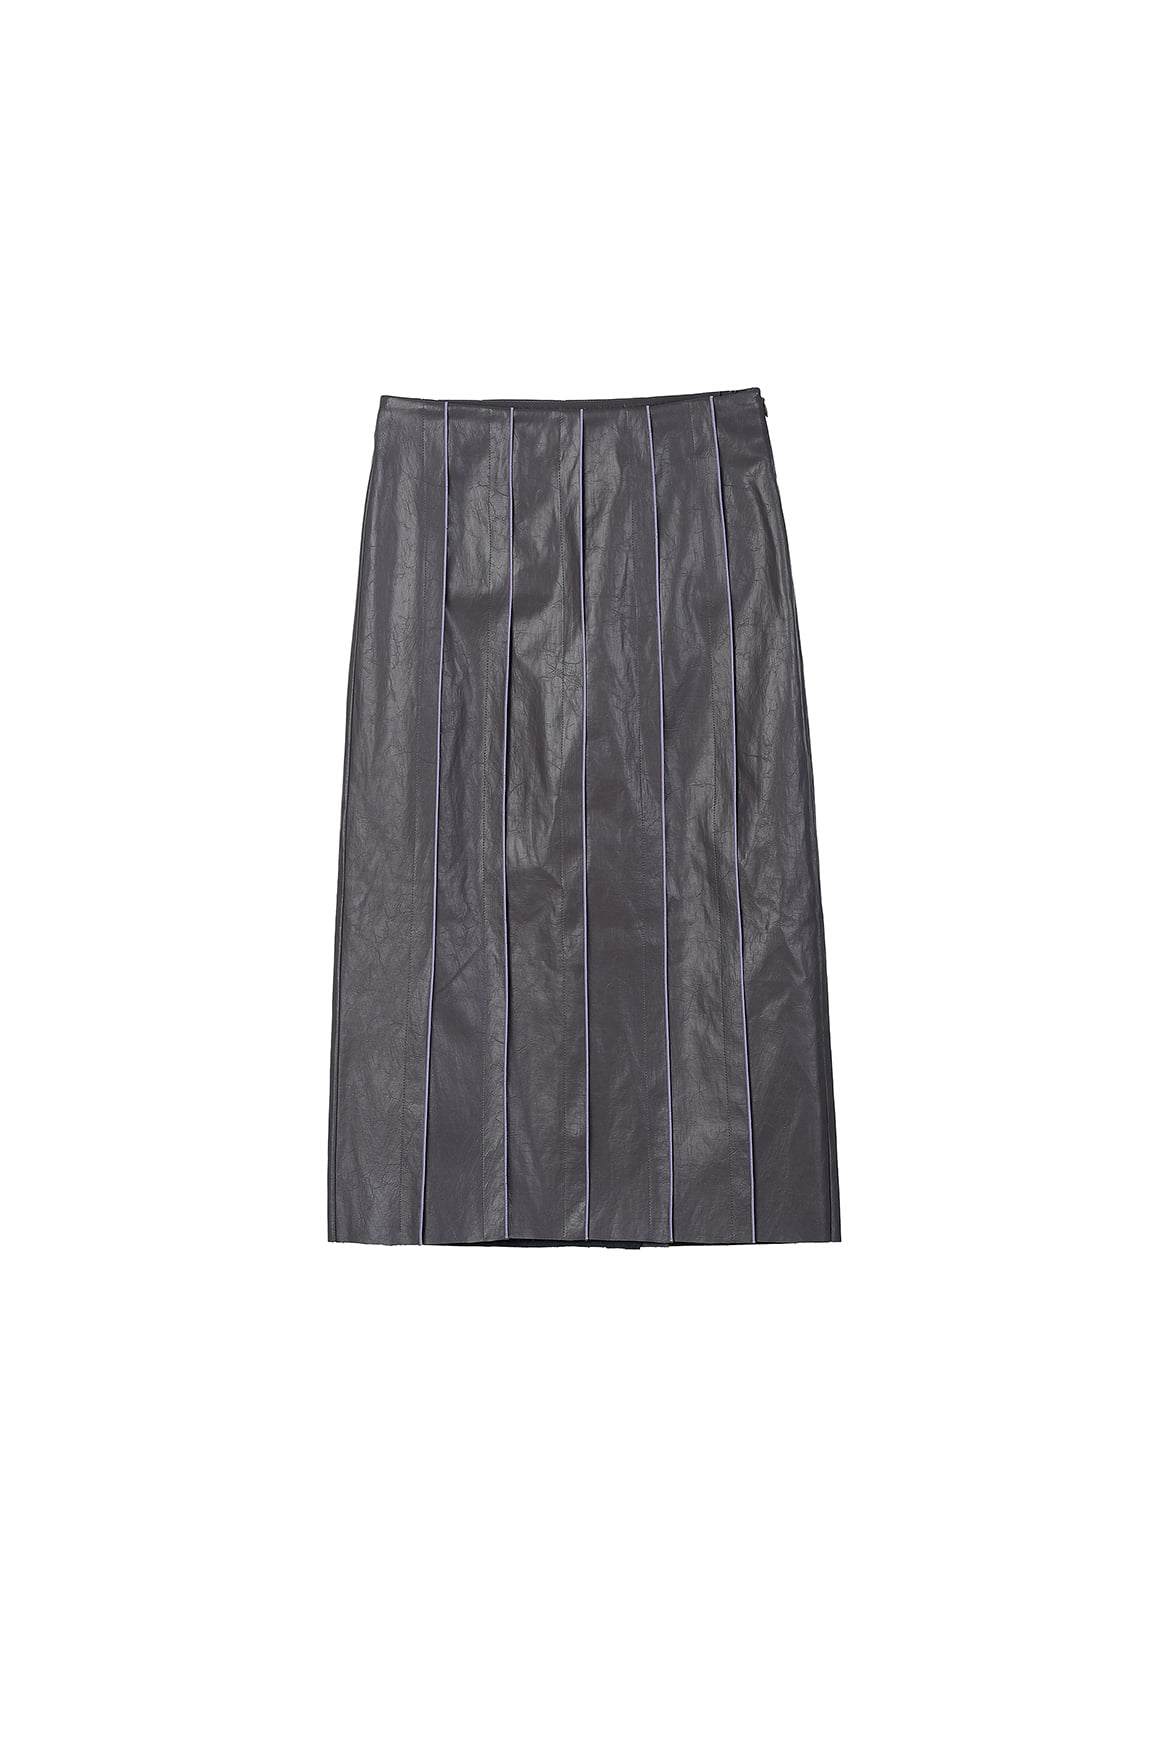 Colour Edges Eco Leather Skirt_Gray Flannel+Lavendula